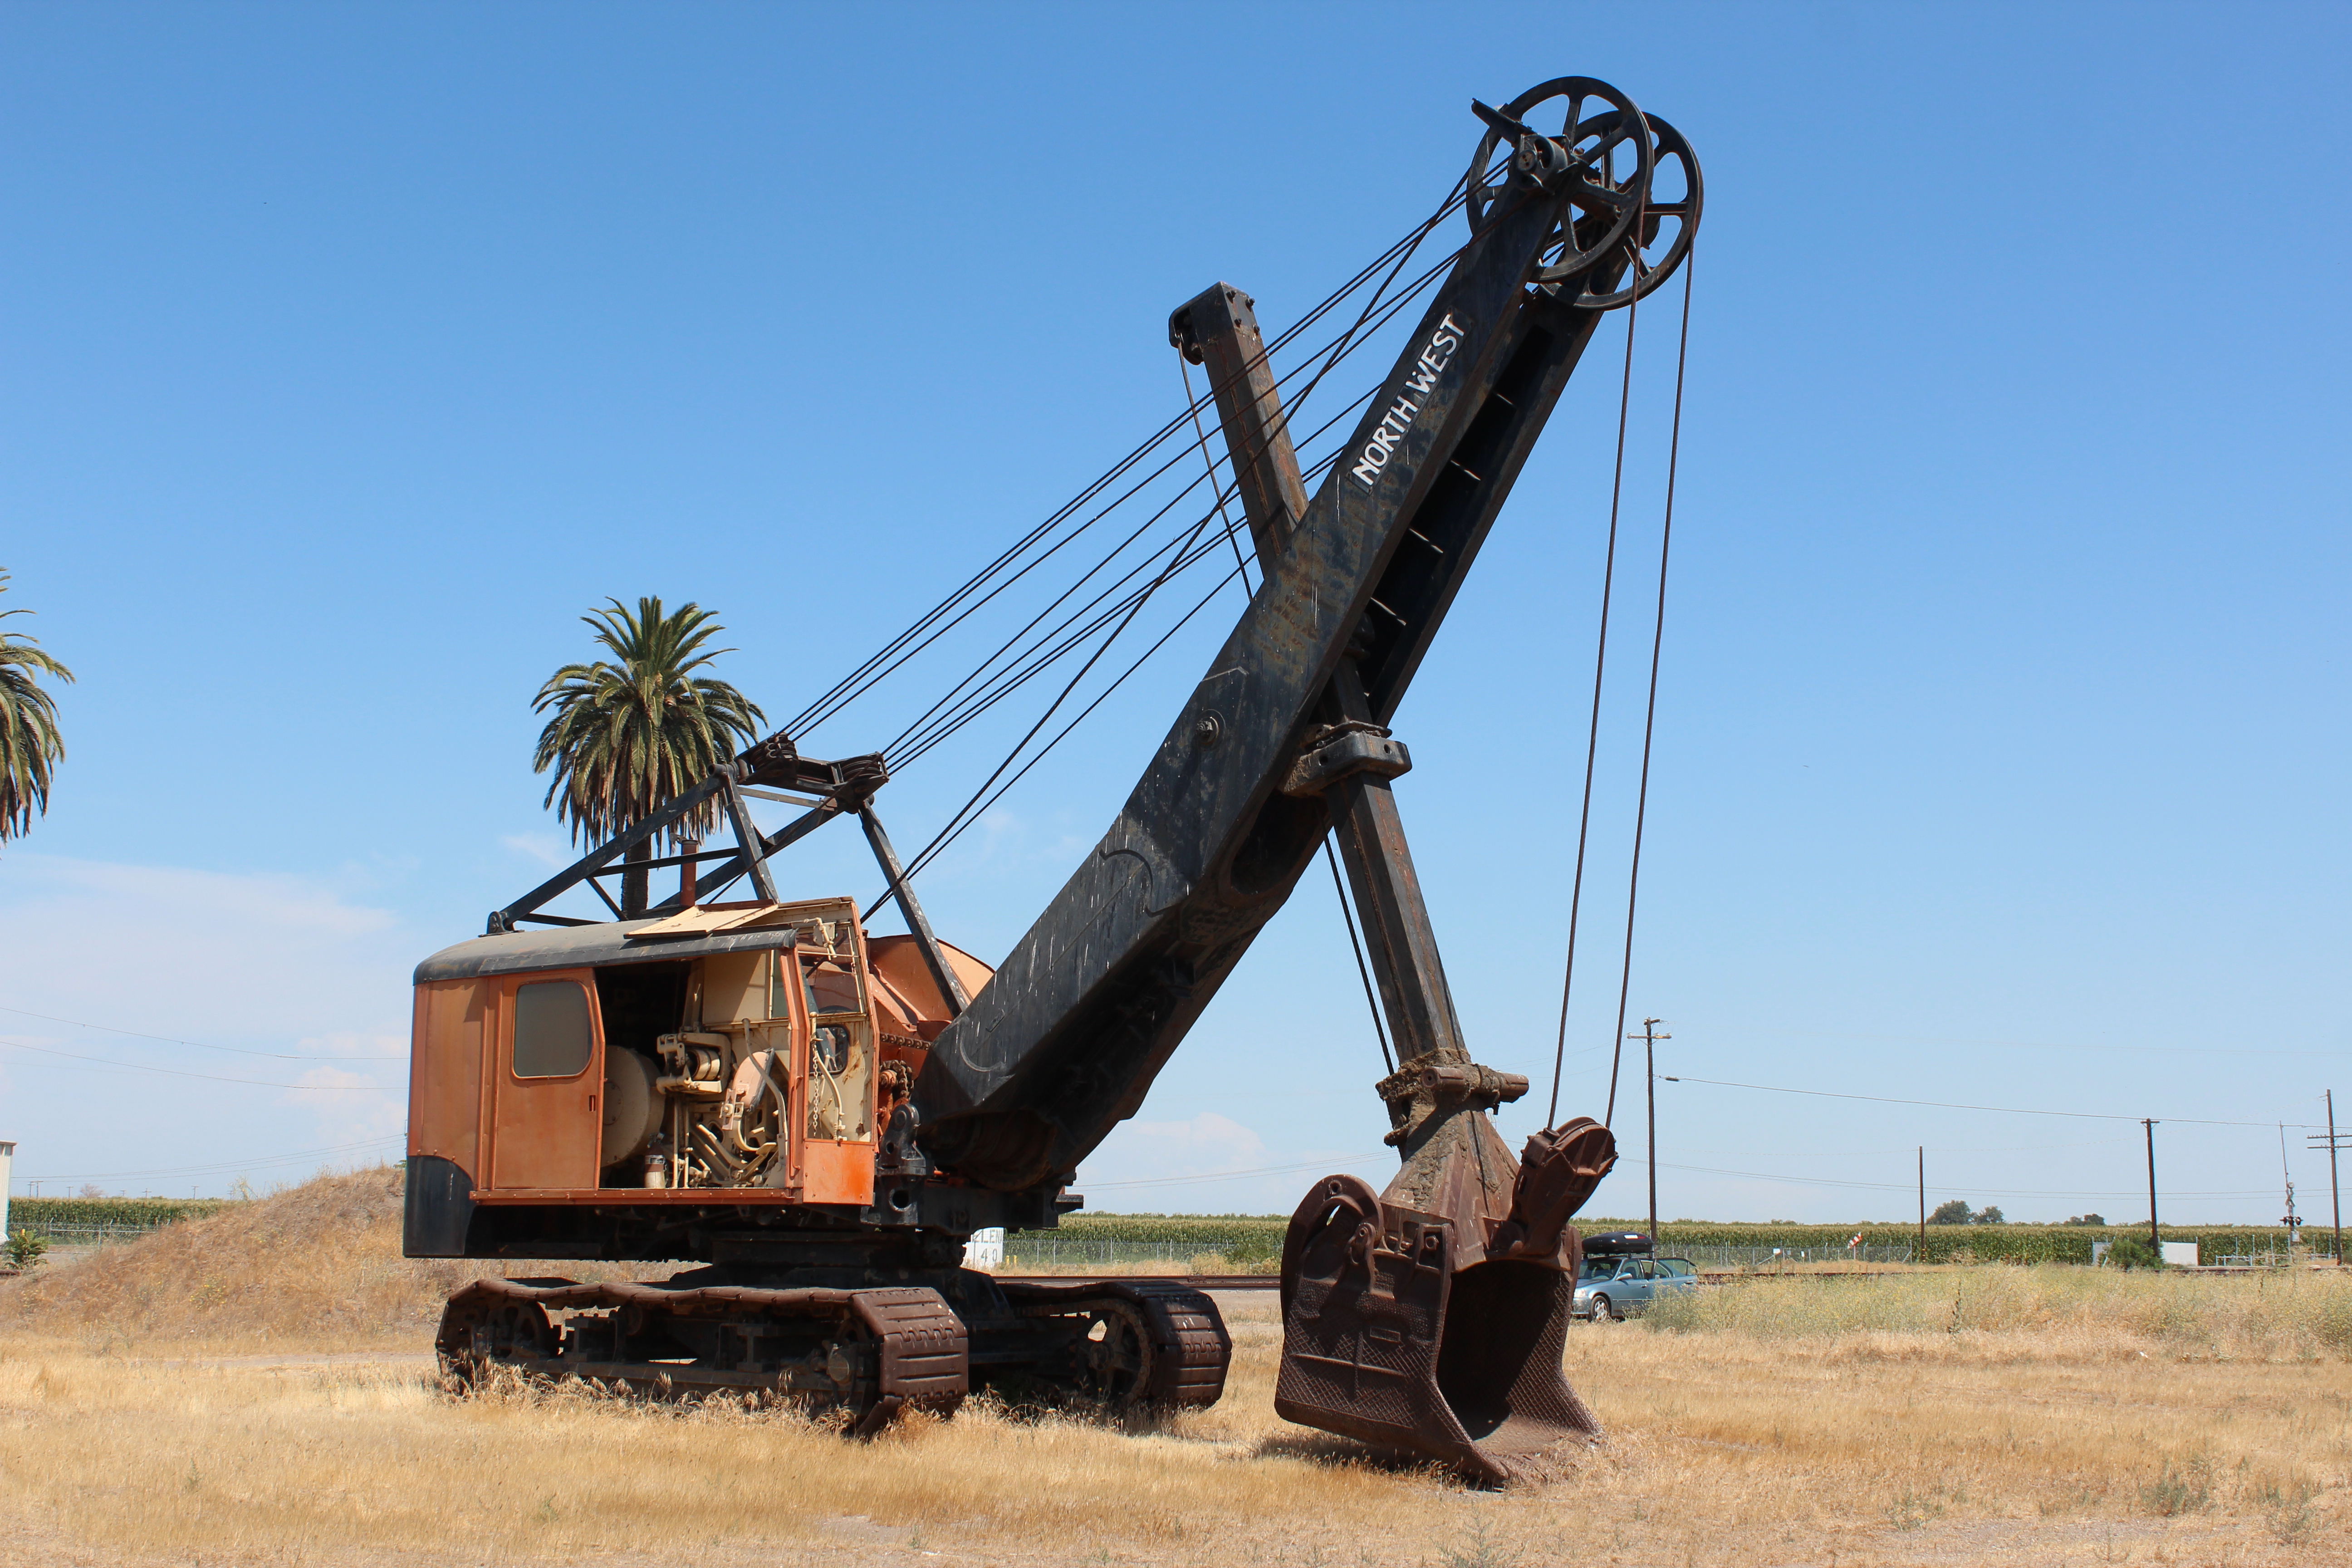 File:Abandoned steam shovel in Zamora, CA.jpg - Wikimedia Commons